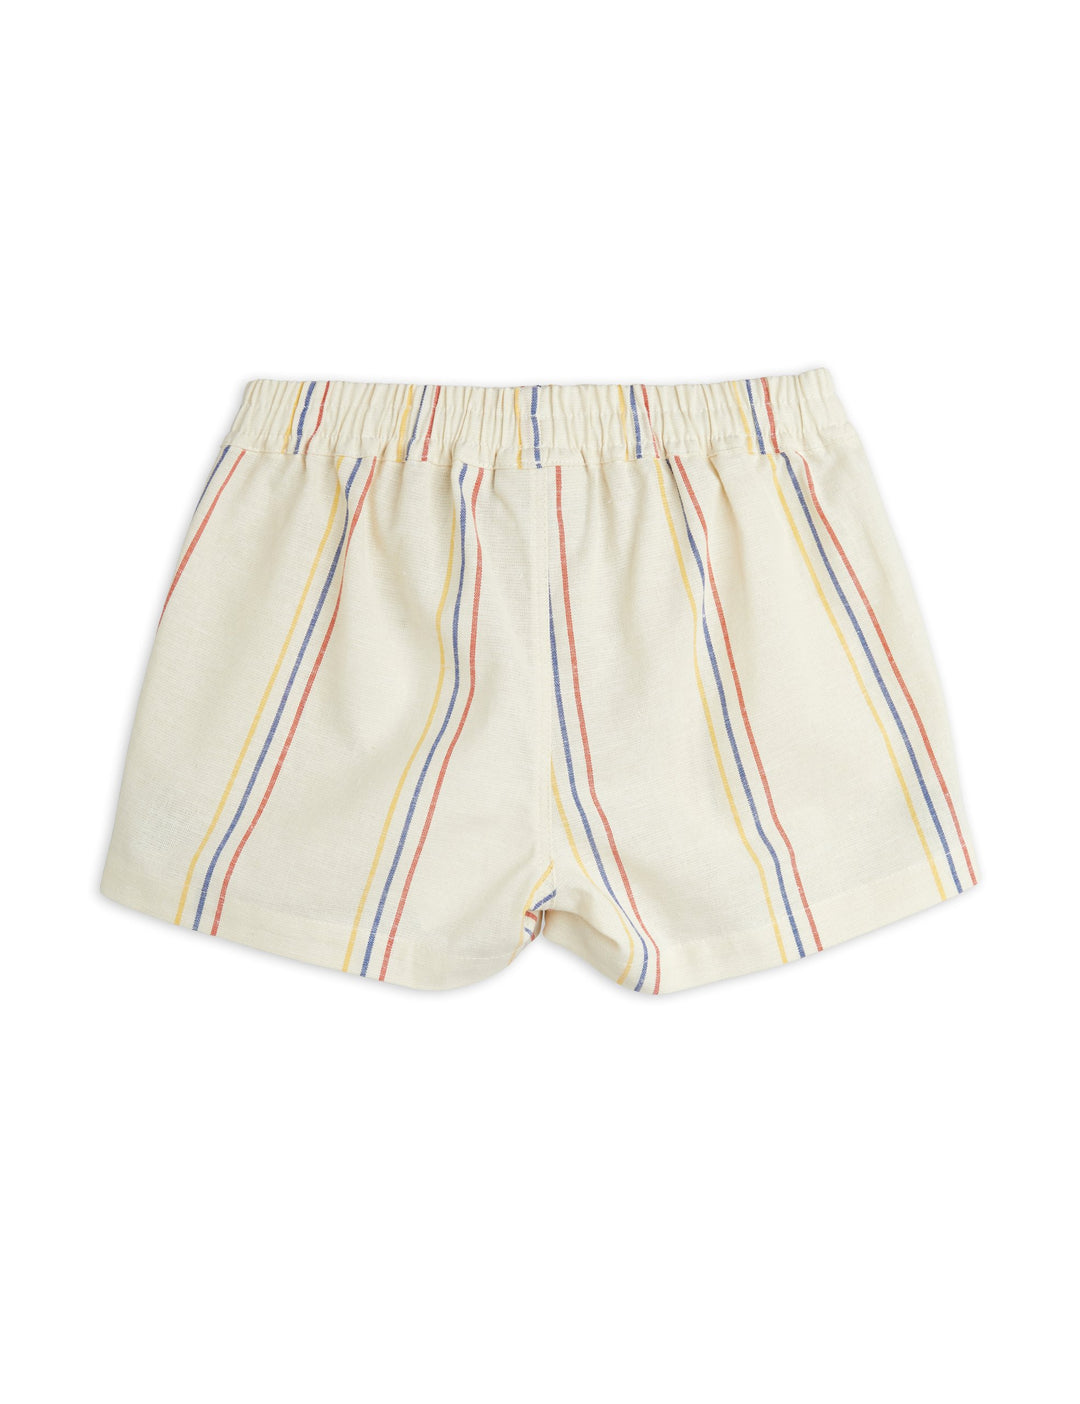 Stripe y/d woven shorts